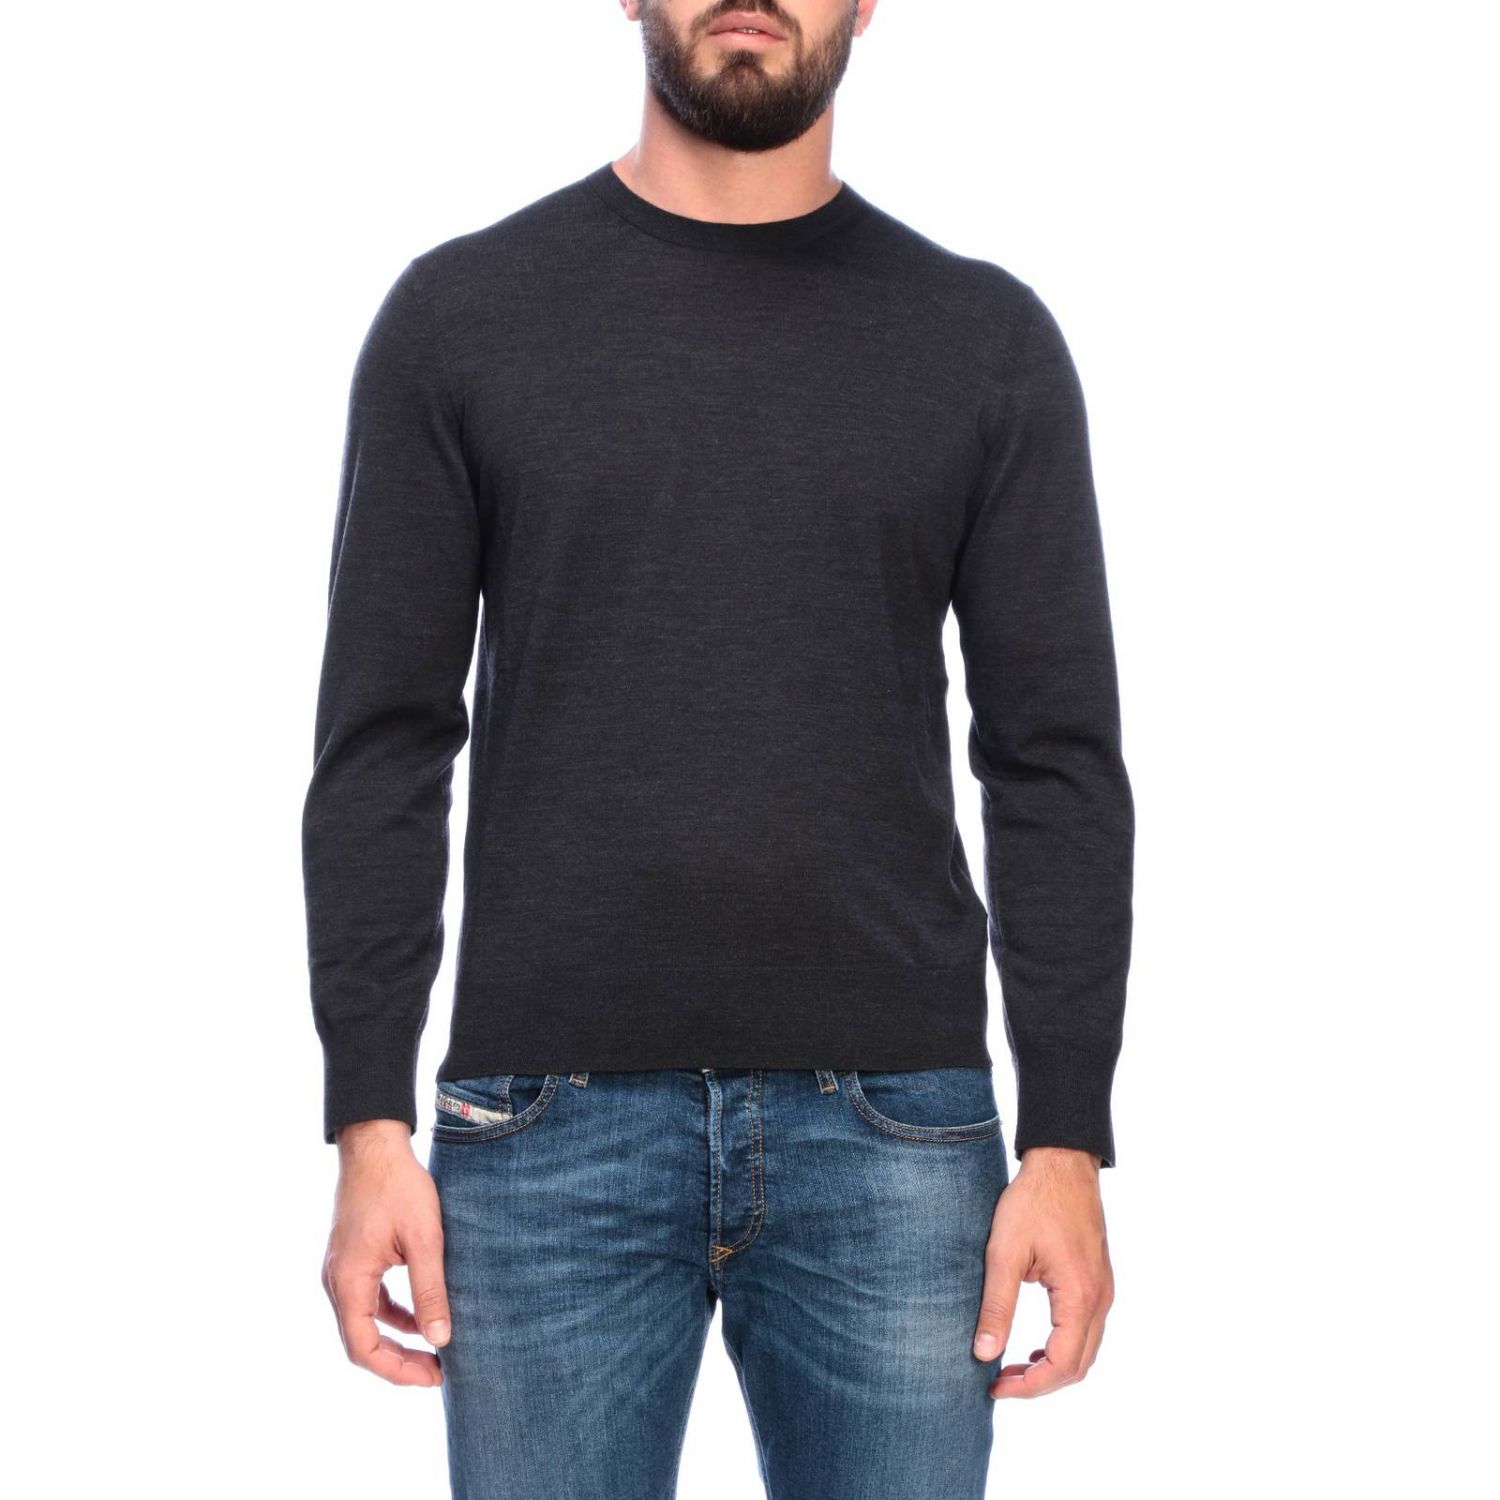 Z Zegna Outlet: Sweater men | Sweater Z Zegna Men Charcoal | Sweater Z ...